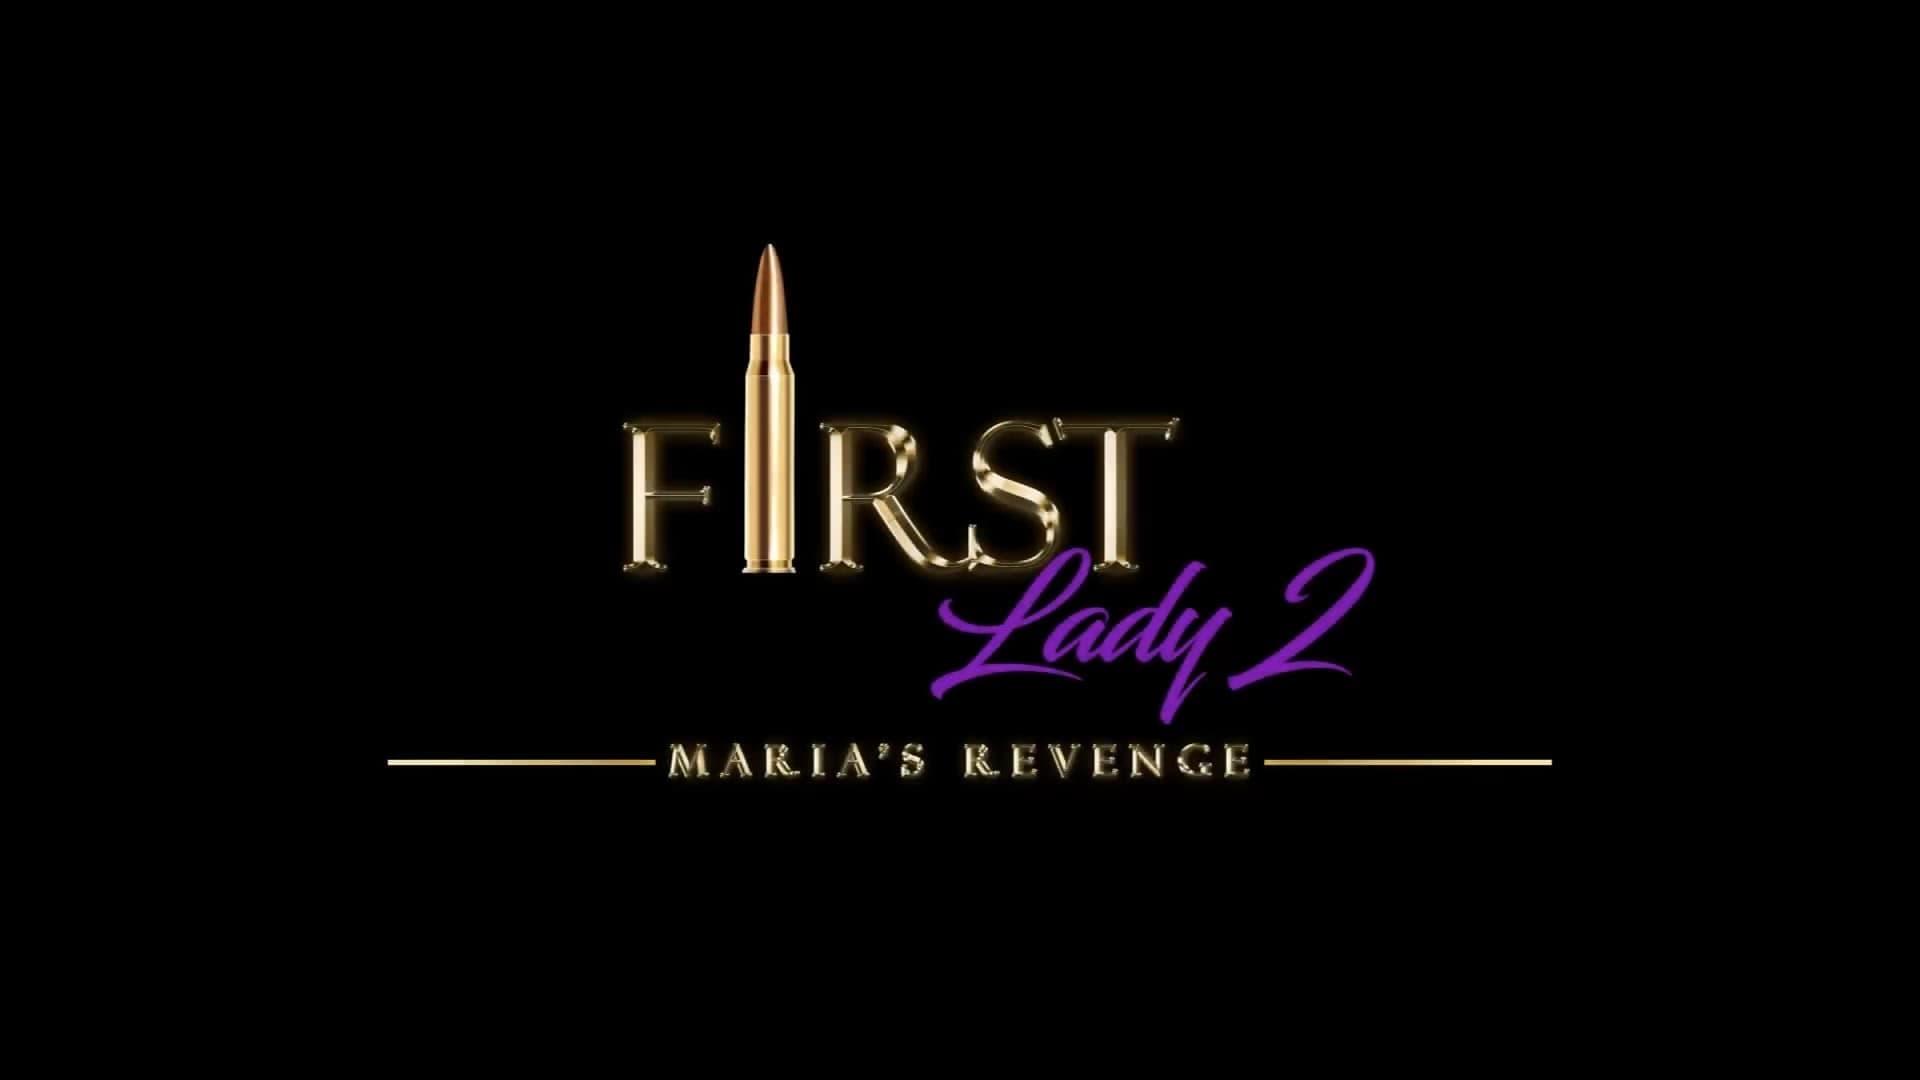 First Lady II: Maria's Revenge backdrop